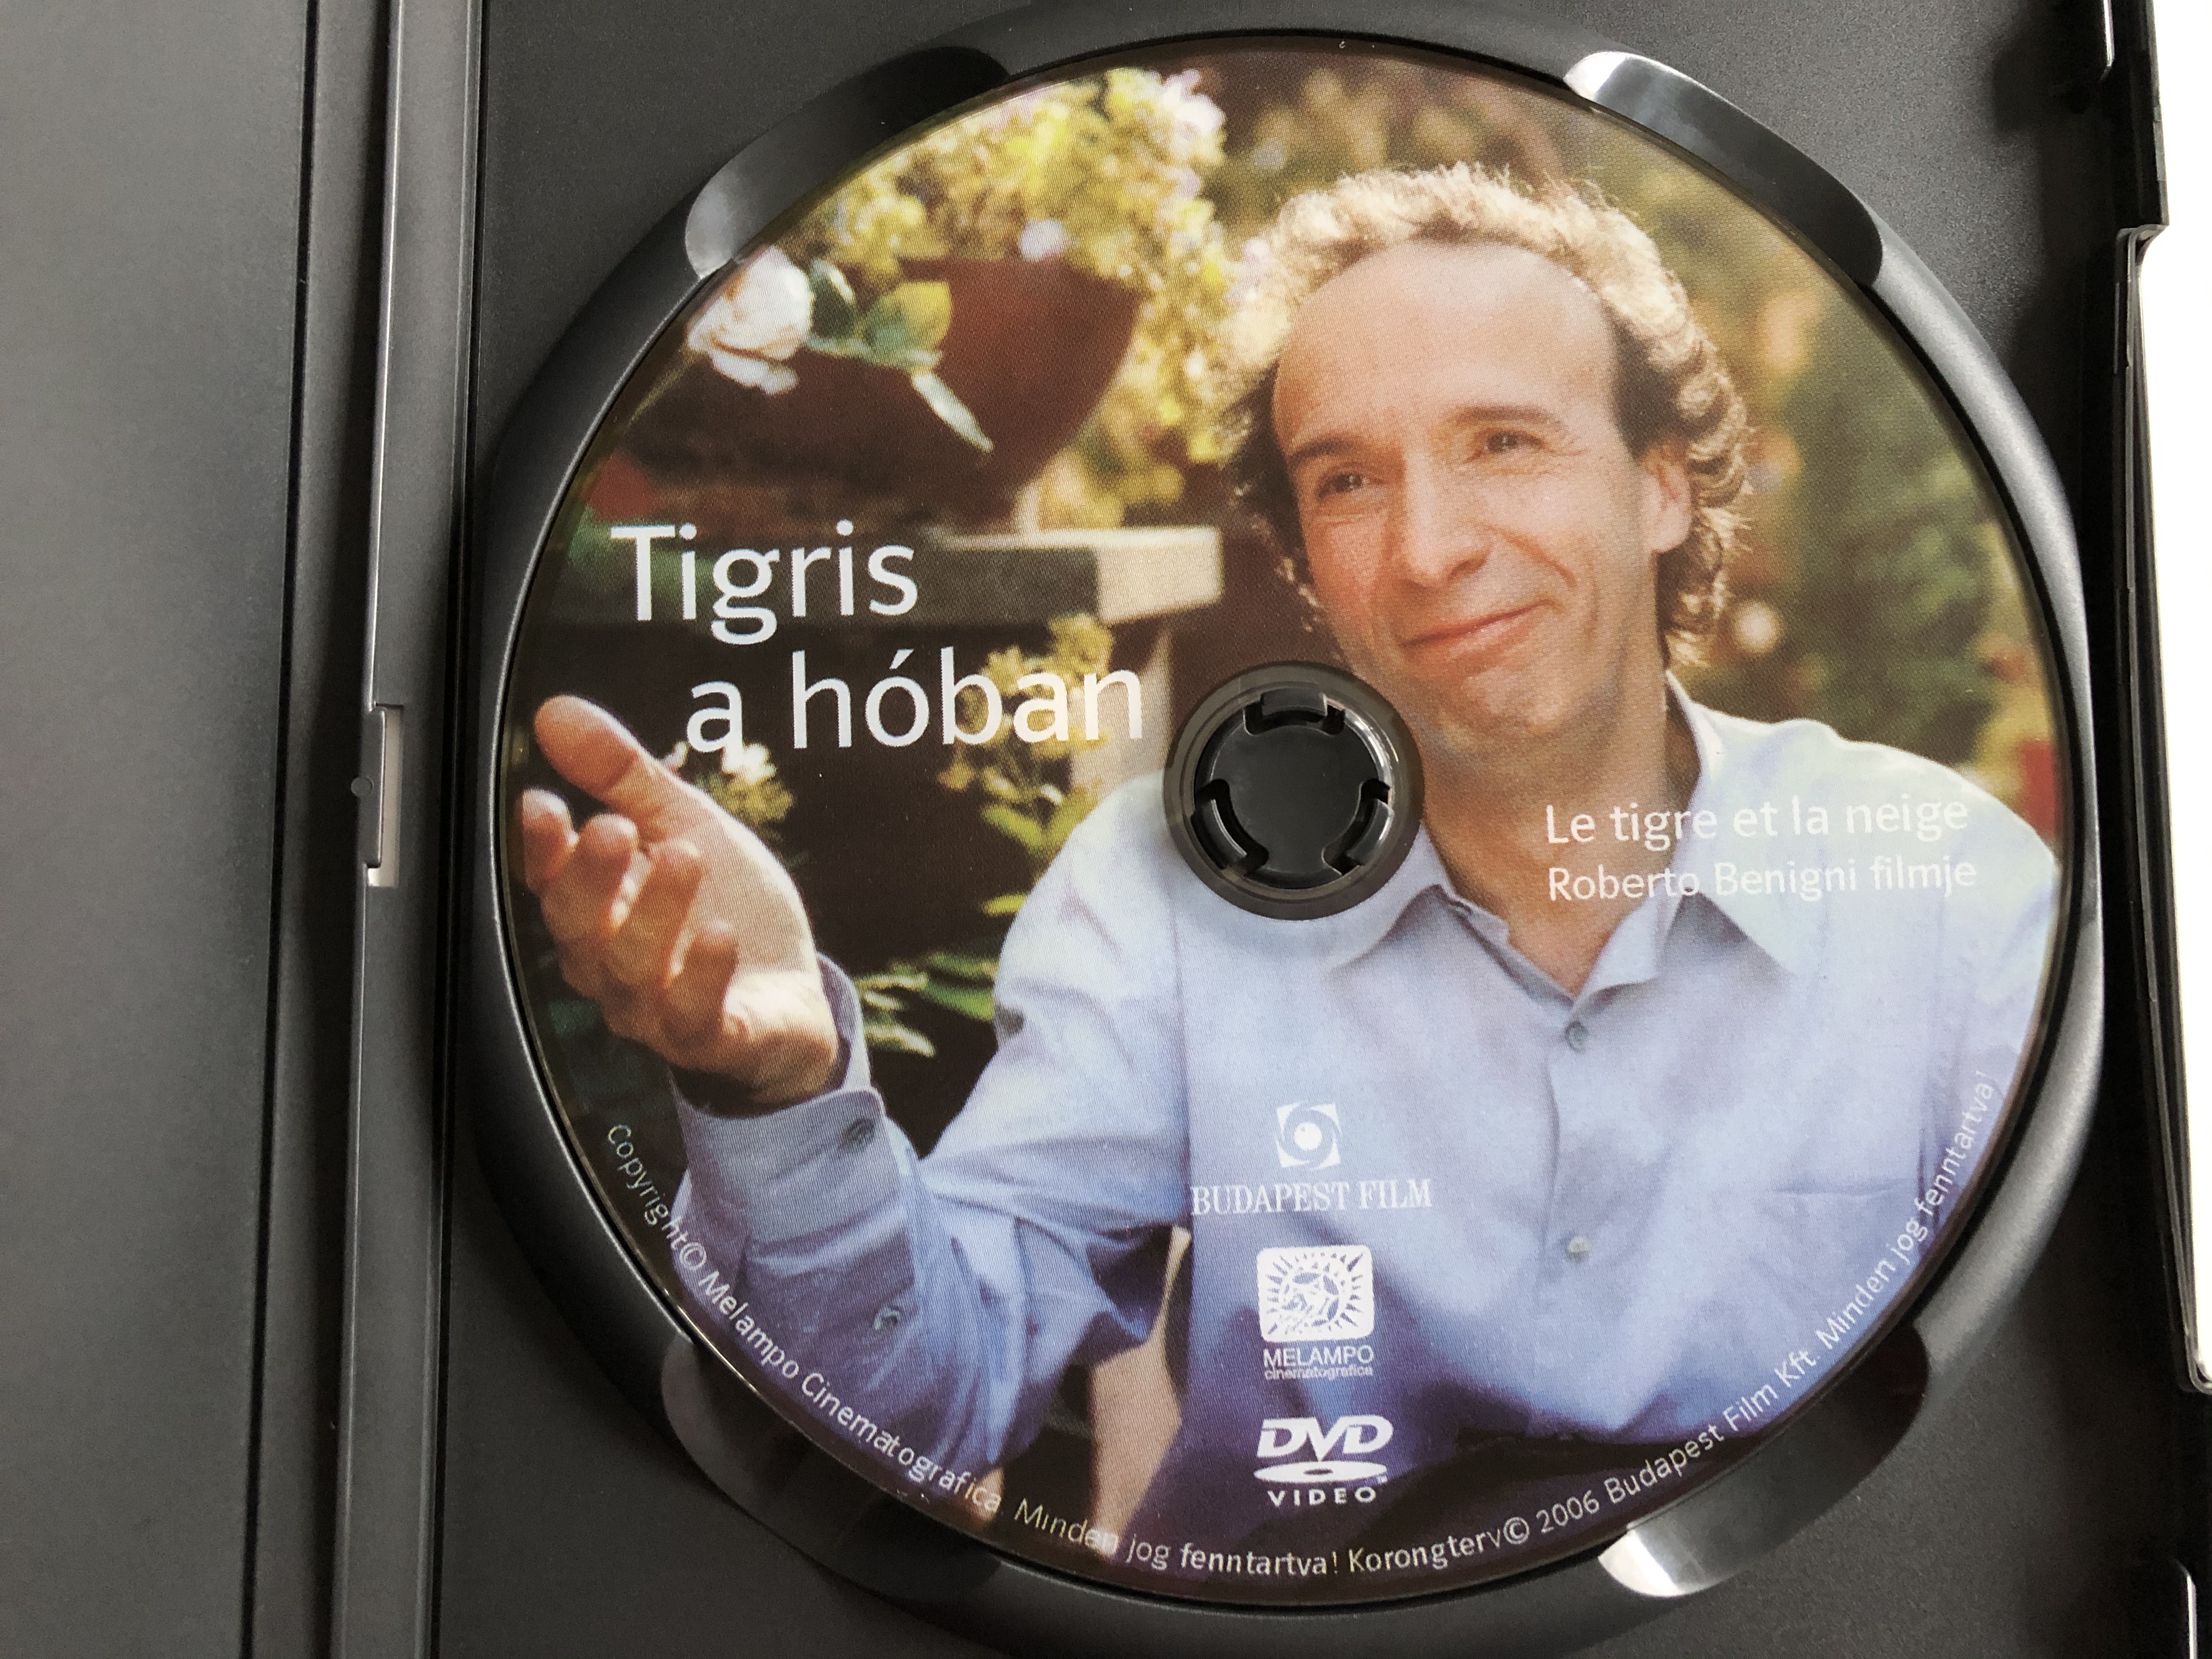 Le tigre ey la neige DVD 2005 Tigris a hóban  1